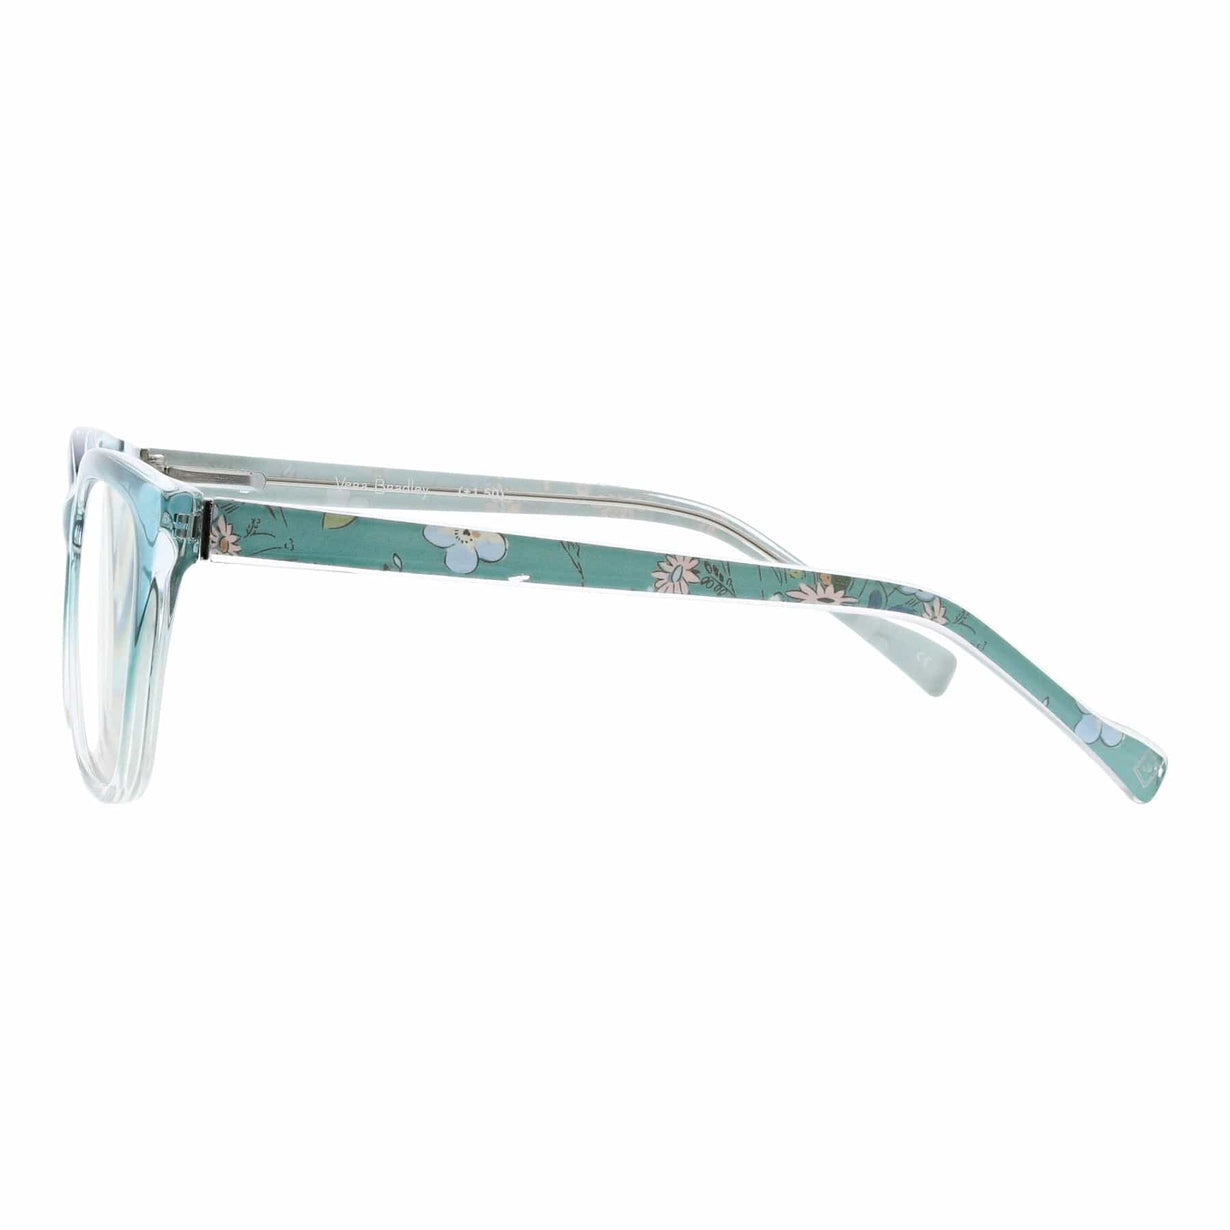 Green paisley eye glasses pouch, sunglasses case, pretty reading